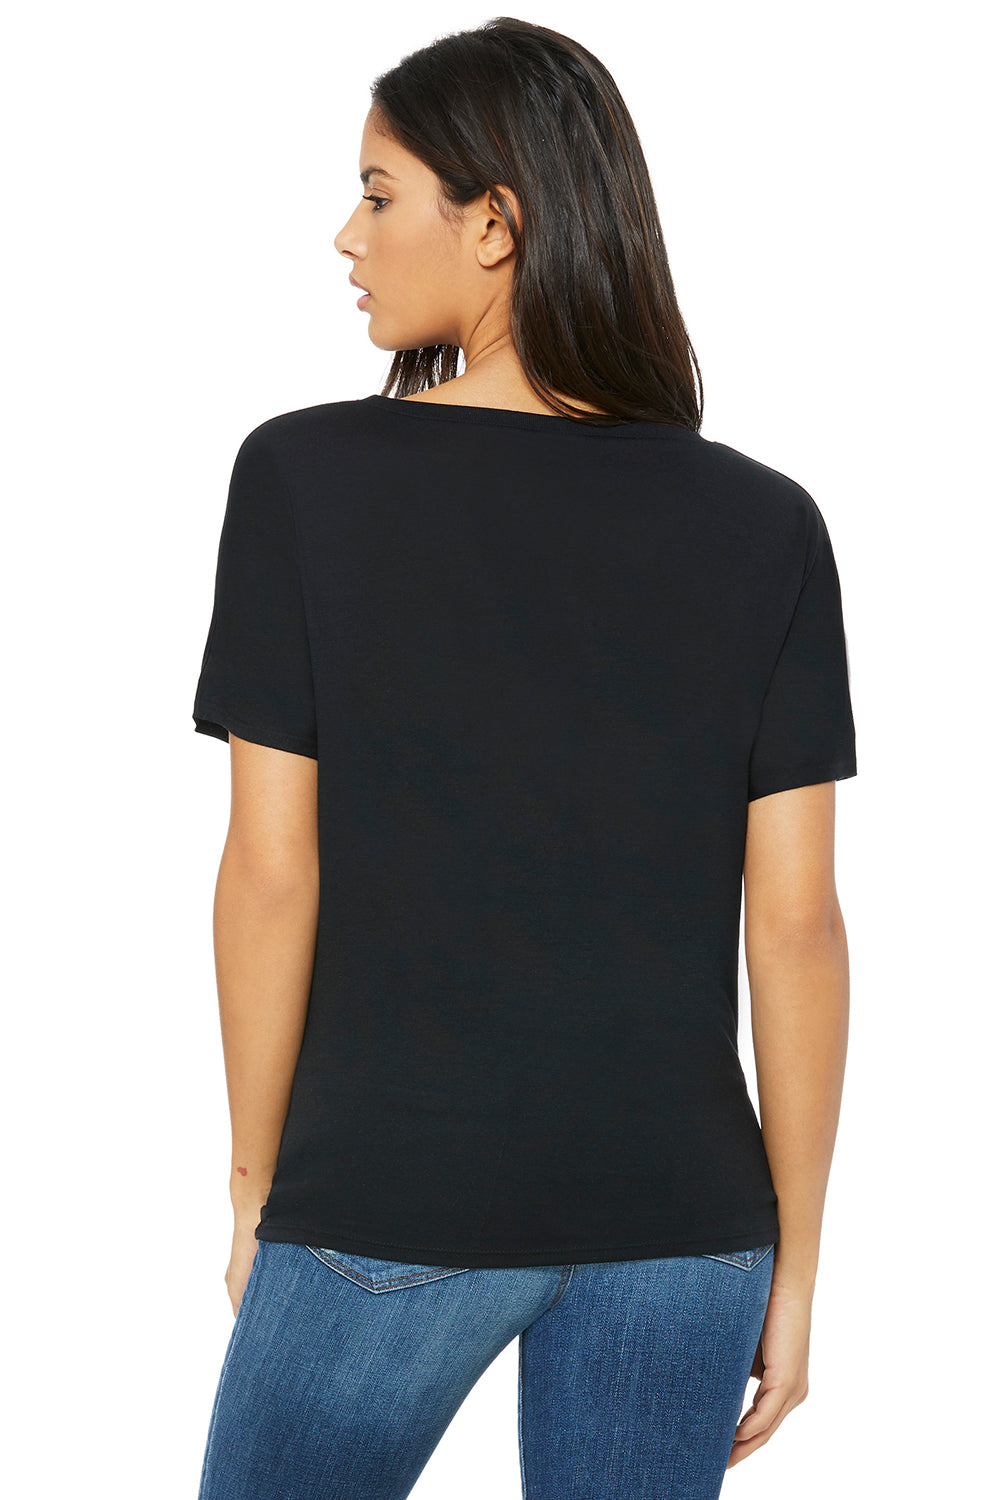 Bella + Canvas 8815 Womens Slouchy Short Sleeve V-Neck T-Shirt Black Model Back